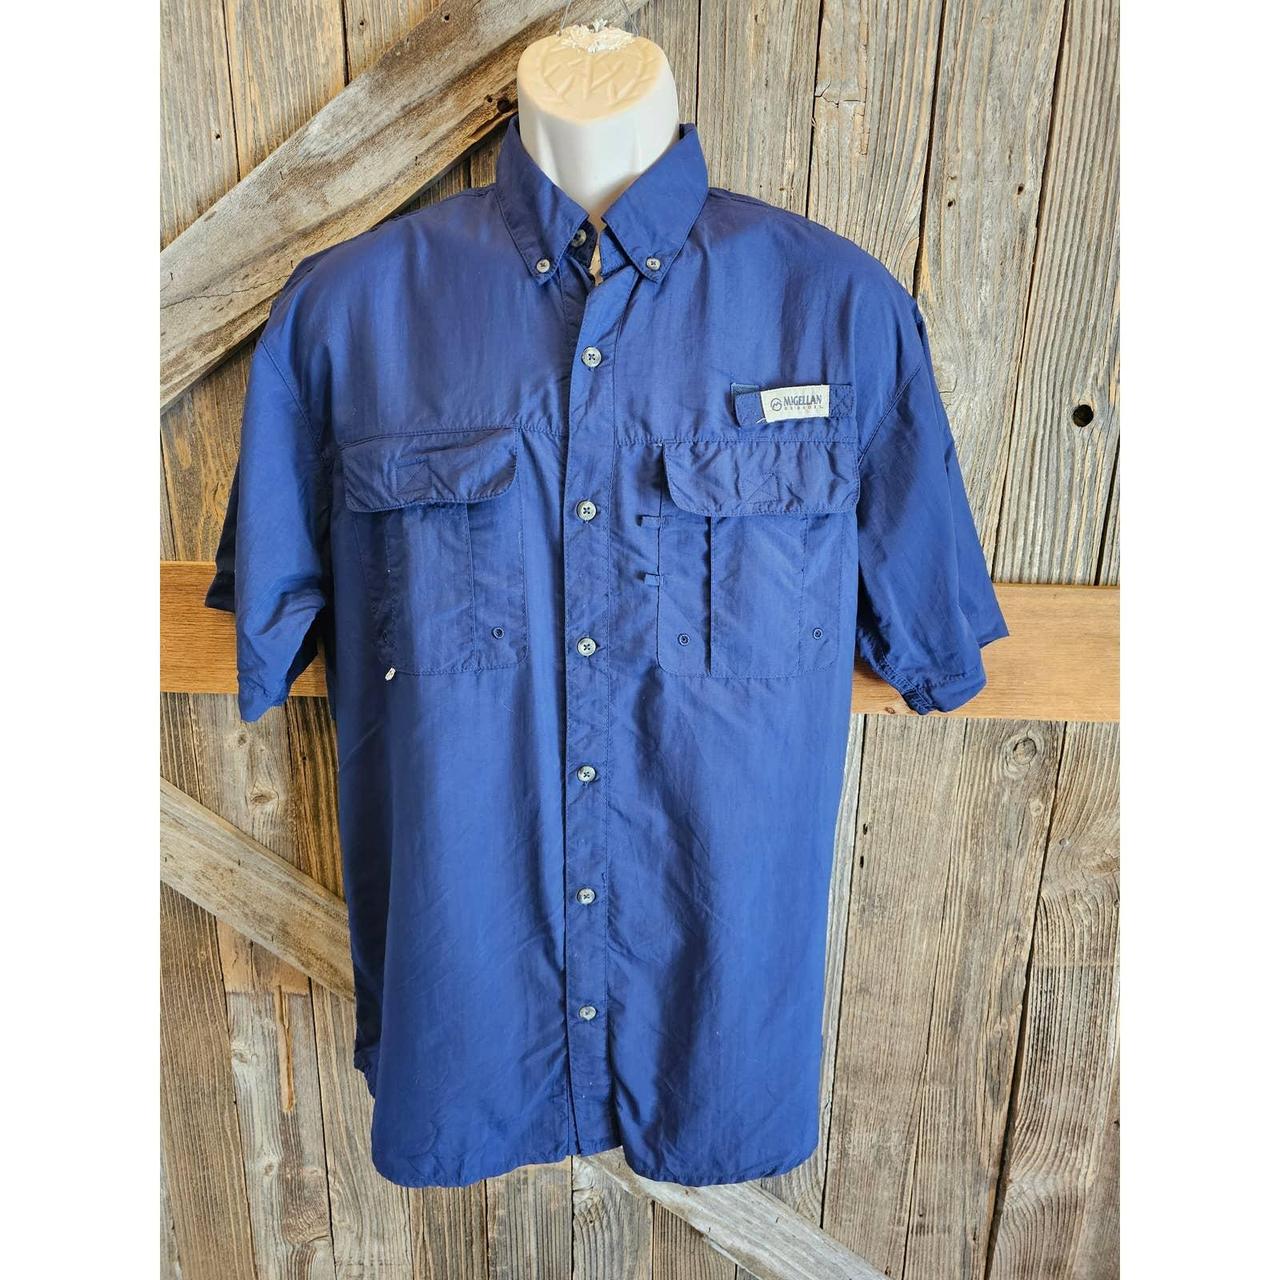 Navy blue magellan fishing shirt. Size medium